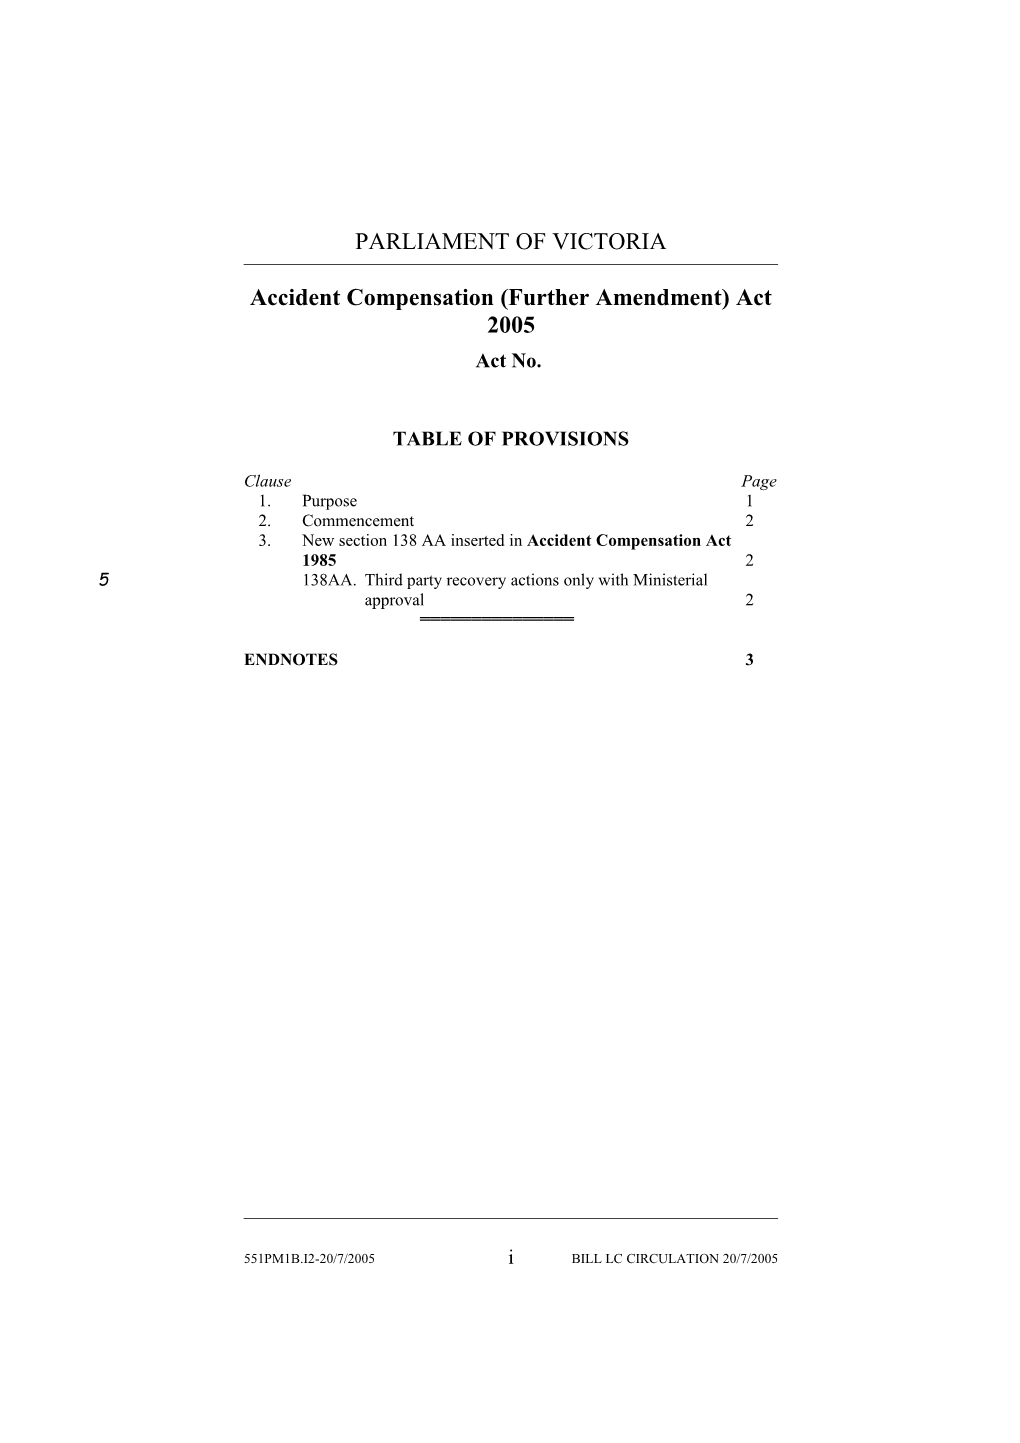 Accident Compensation (Further Amendment) Act 2005